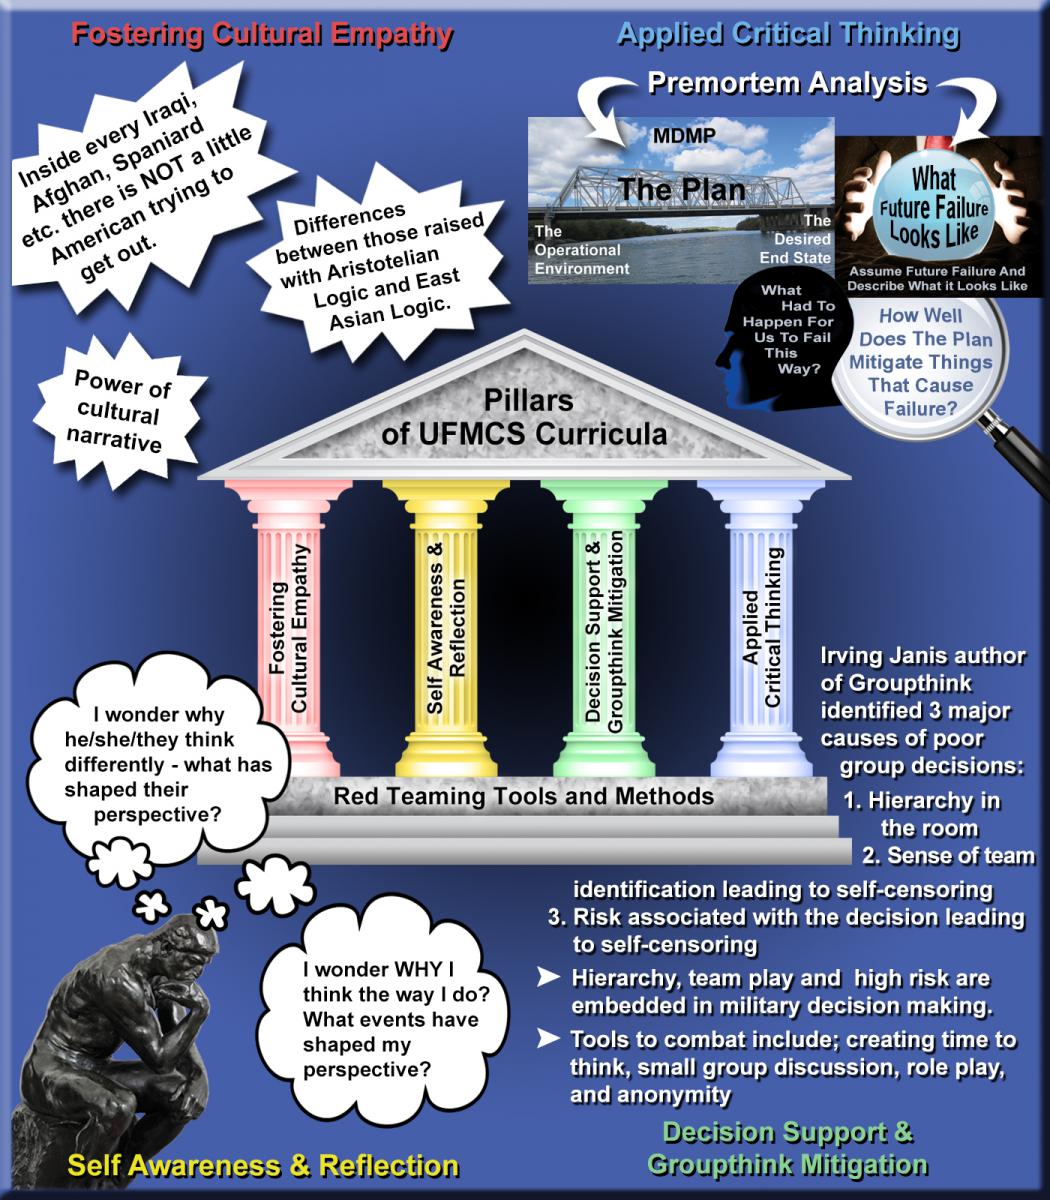 Pillars of UFMCS Curricula